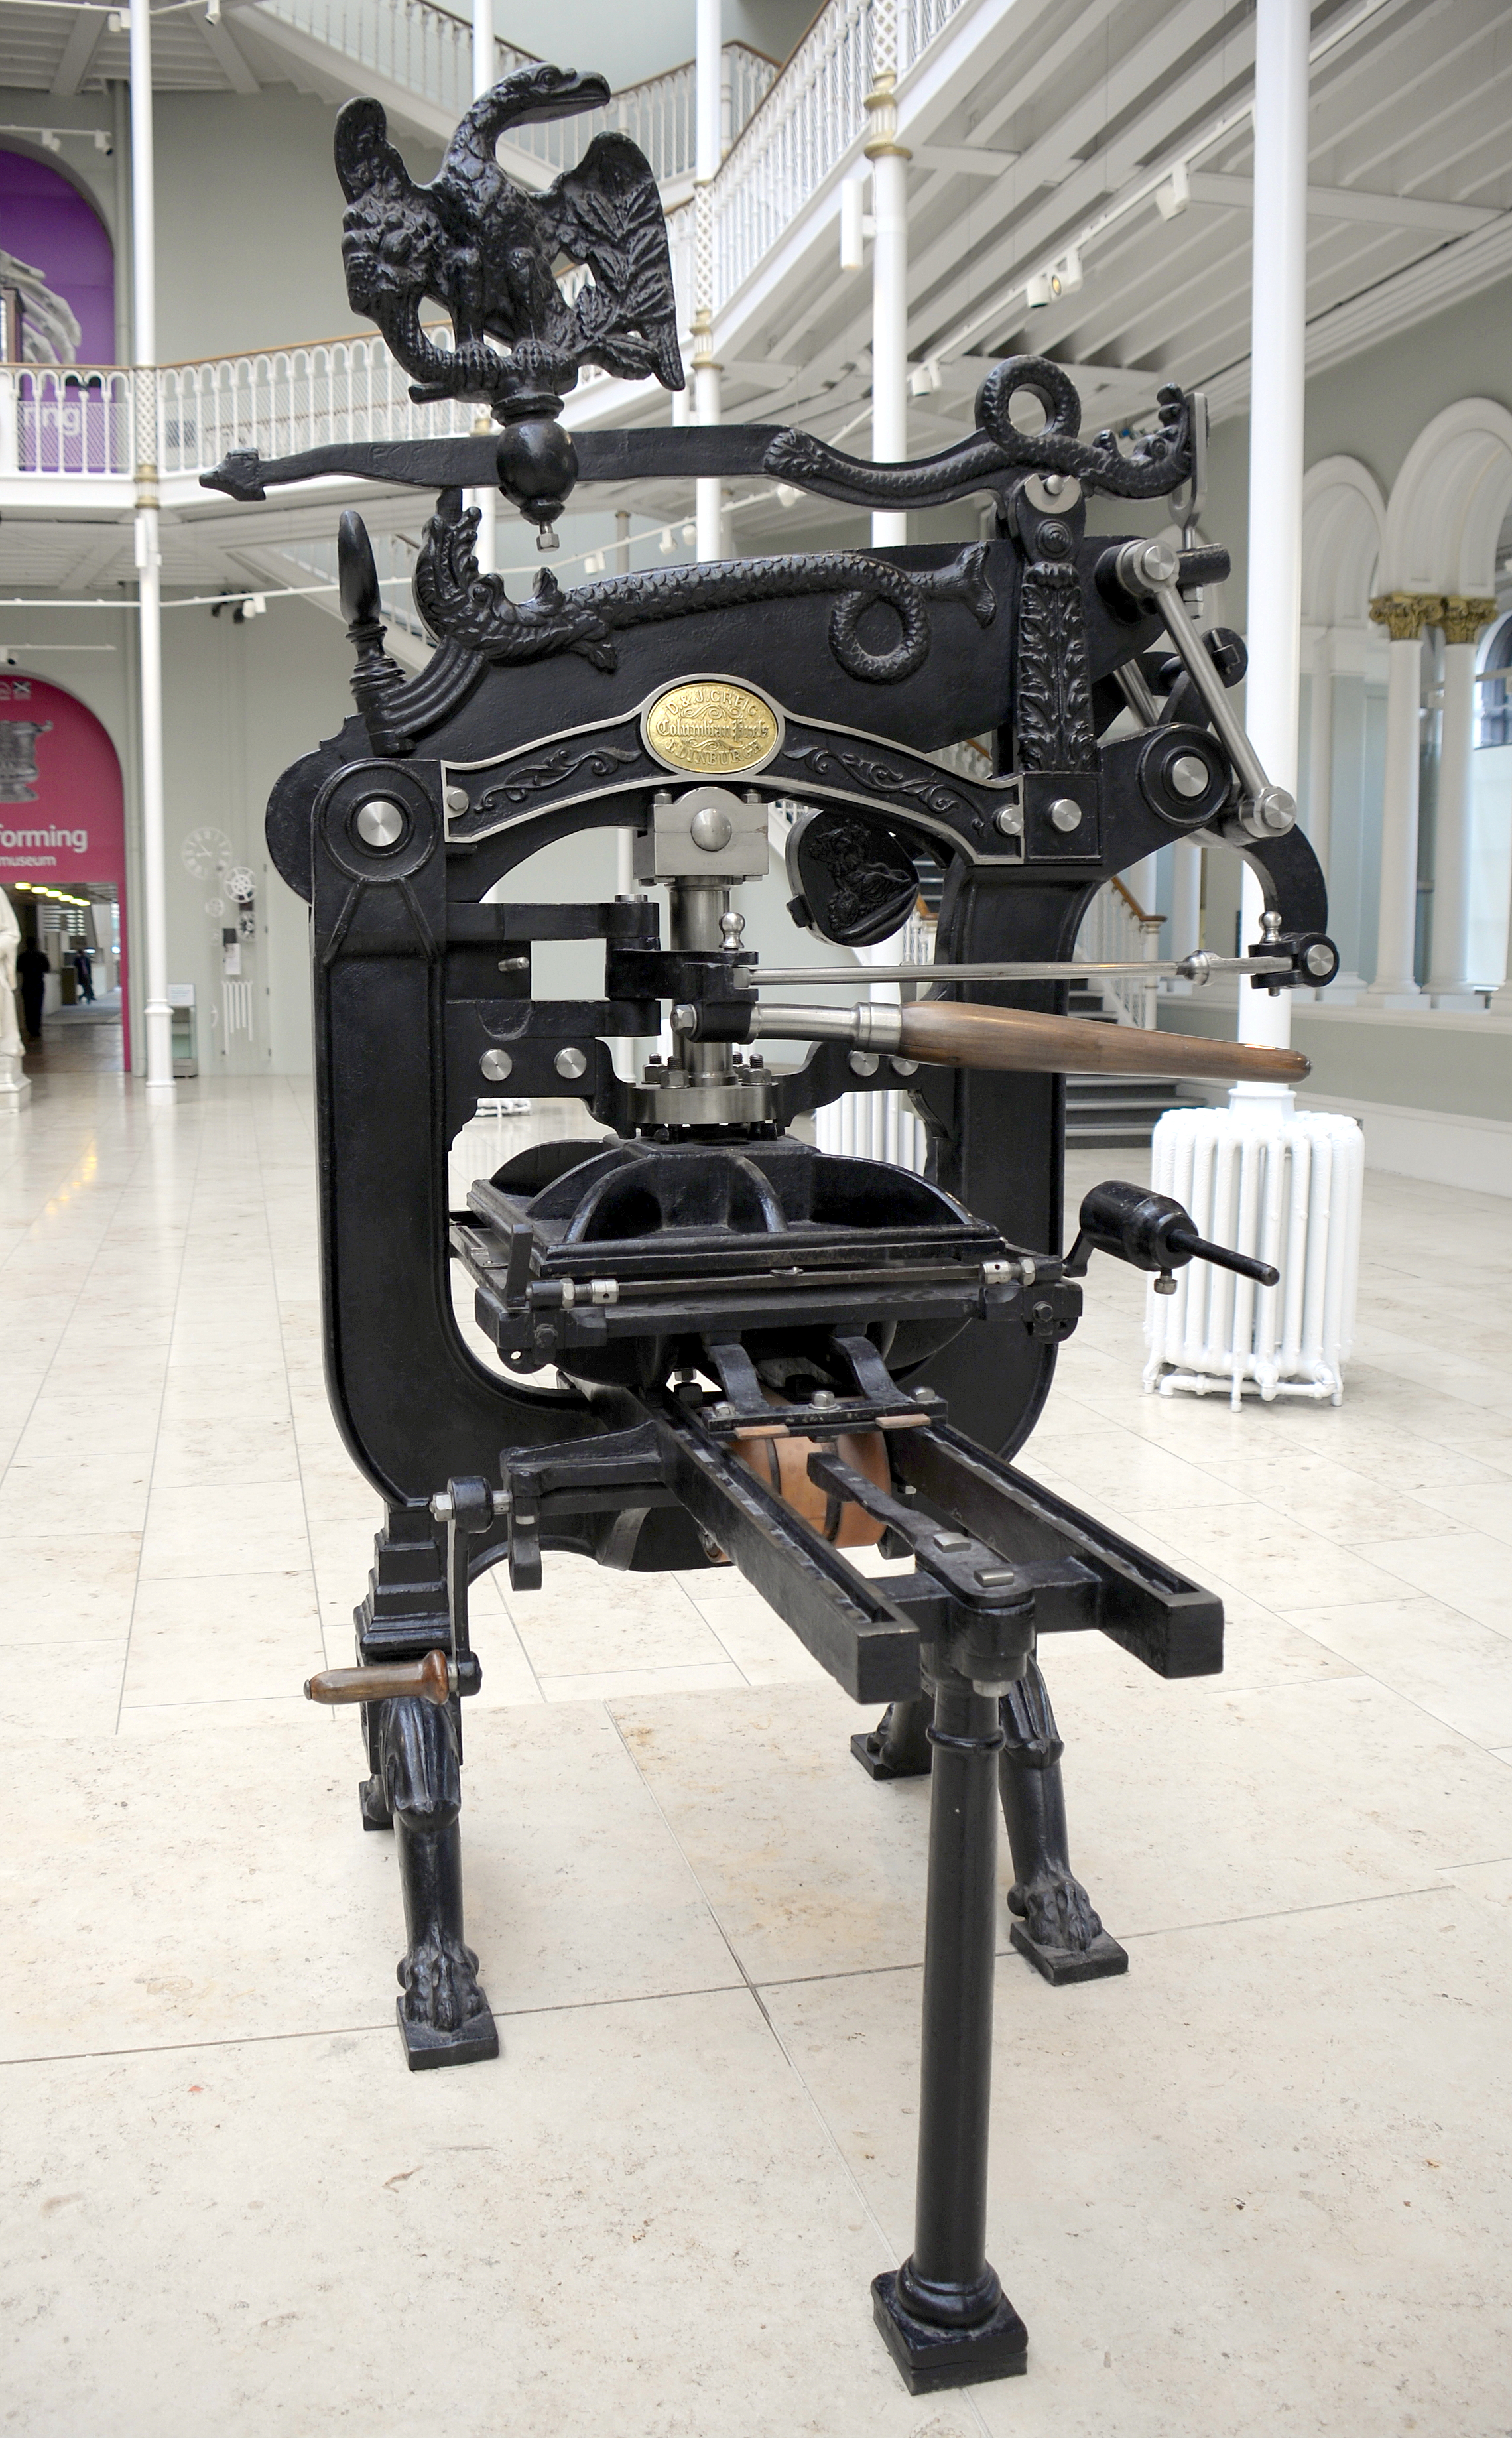 Machine press - Wikipedia